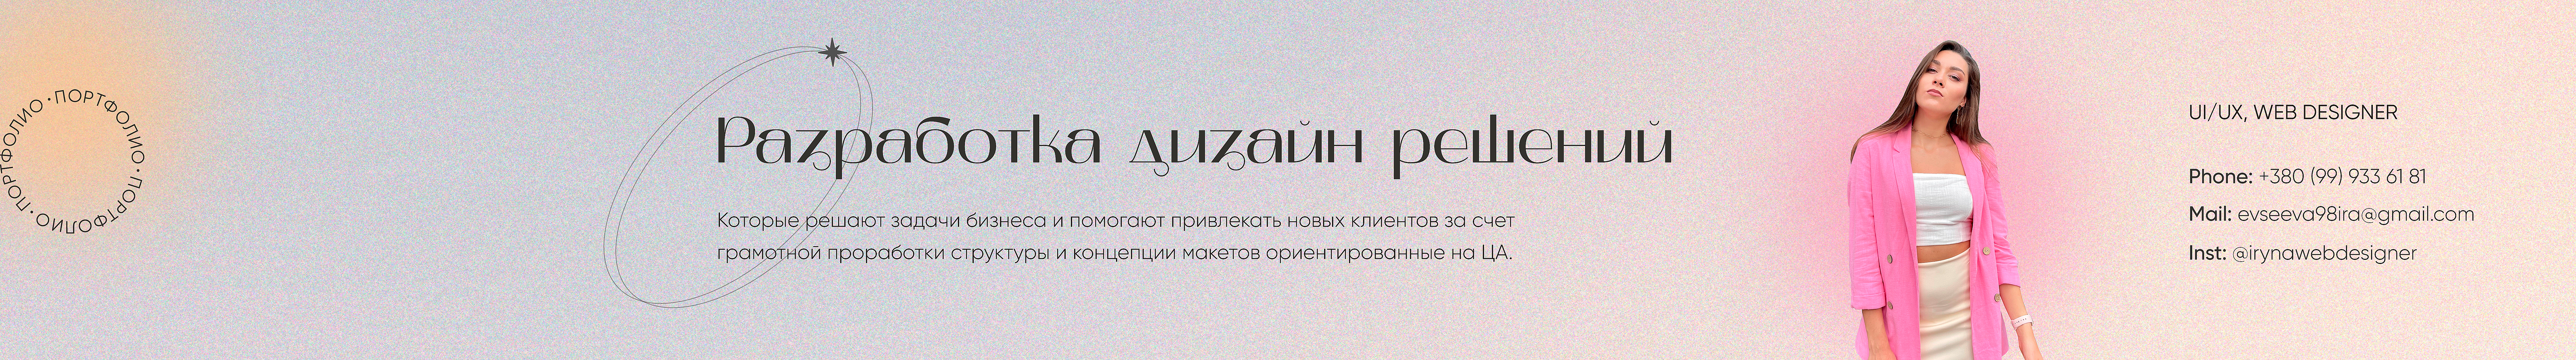 Ирина Фомина's profile banner